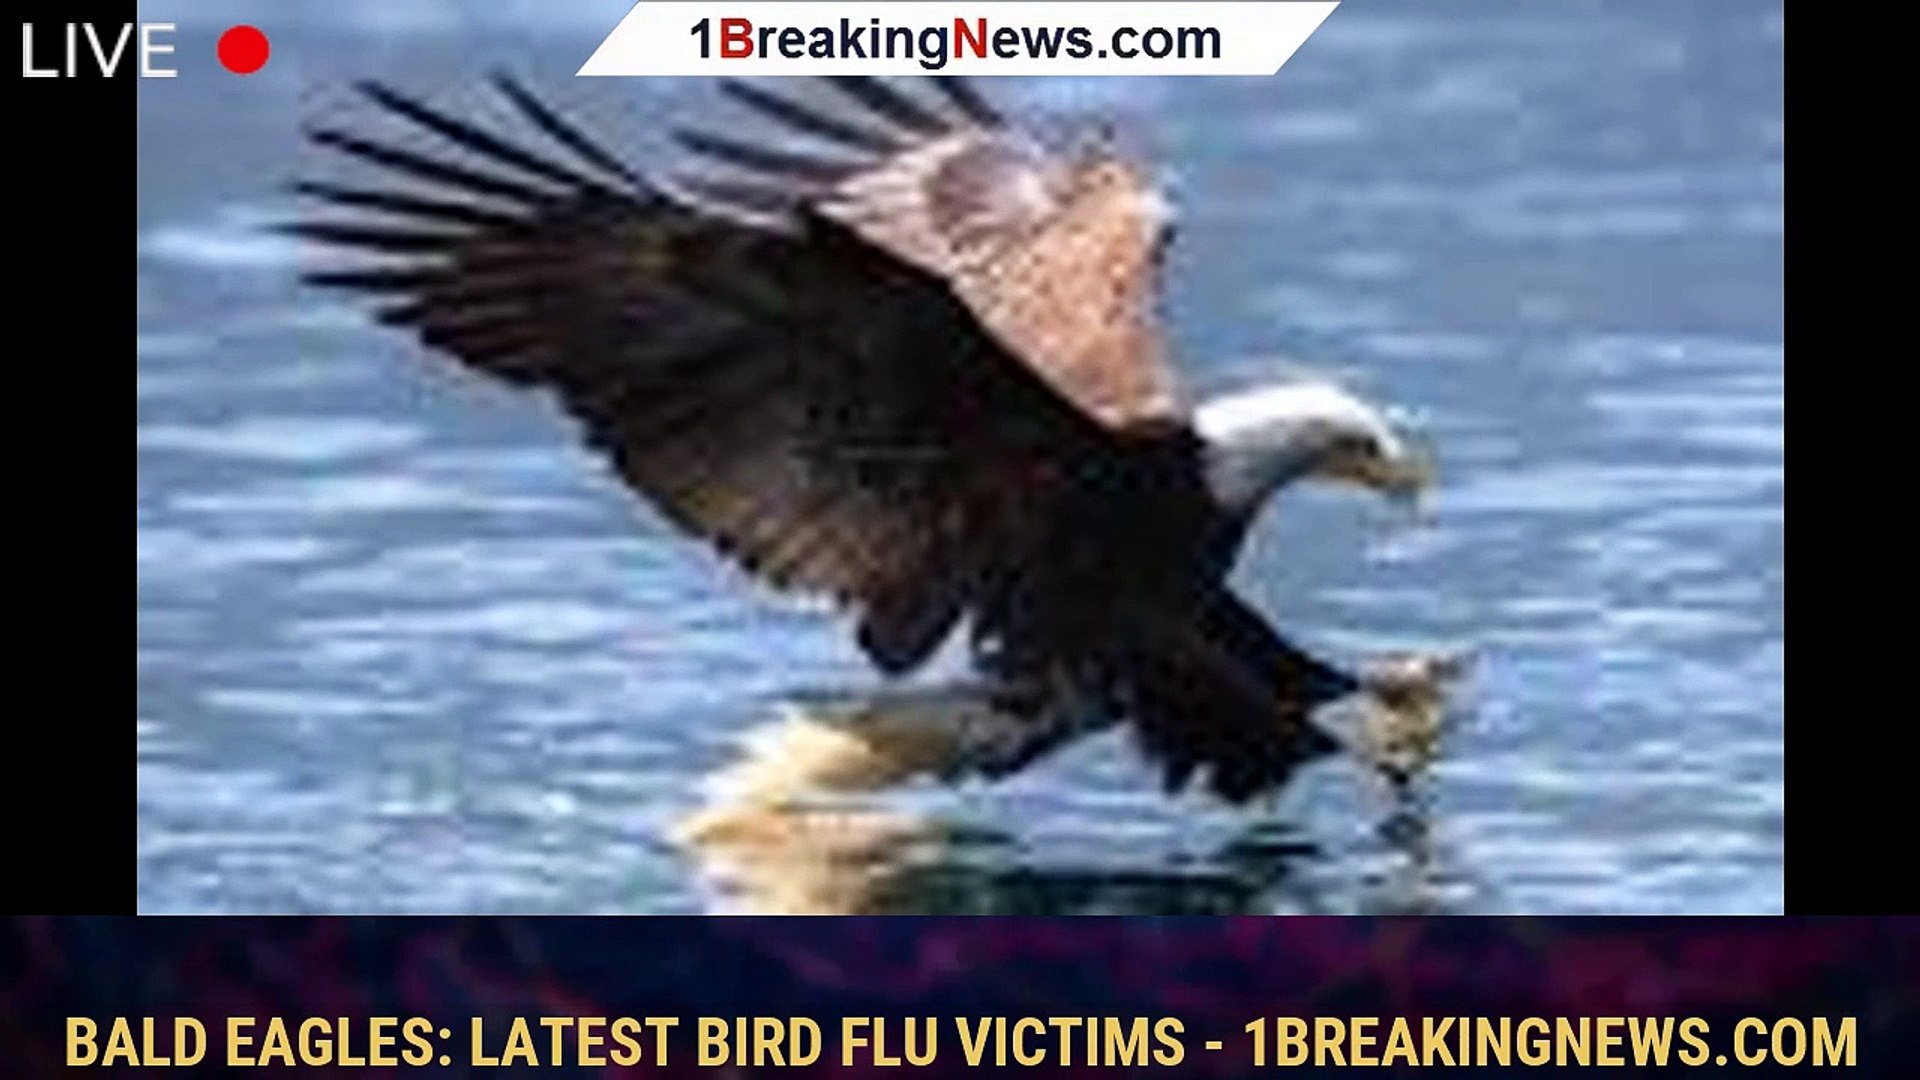 Bald eagles: Latest bird flu victims - 1breakingnews.com